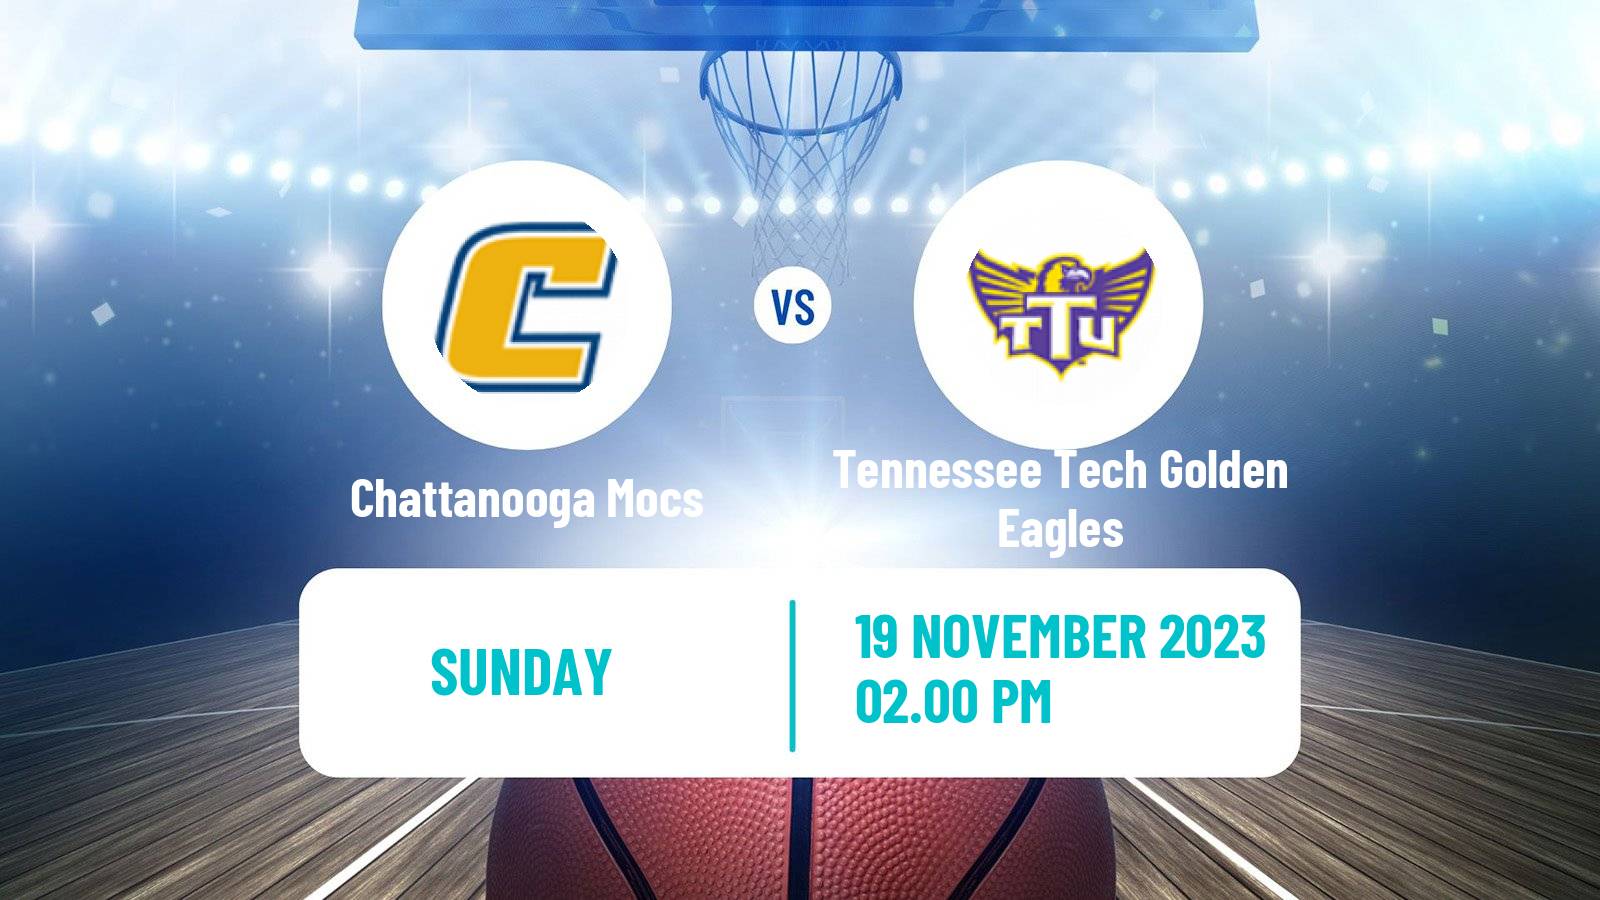 Basketball NCAA College Basketball Chattanooga Mocs - Tennessee Tech Golden Eagles